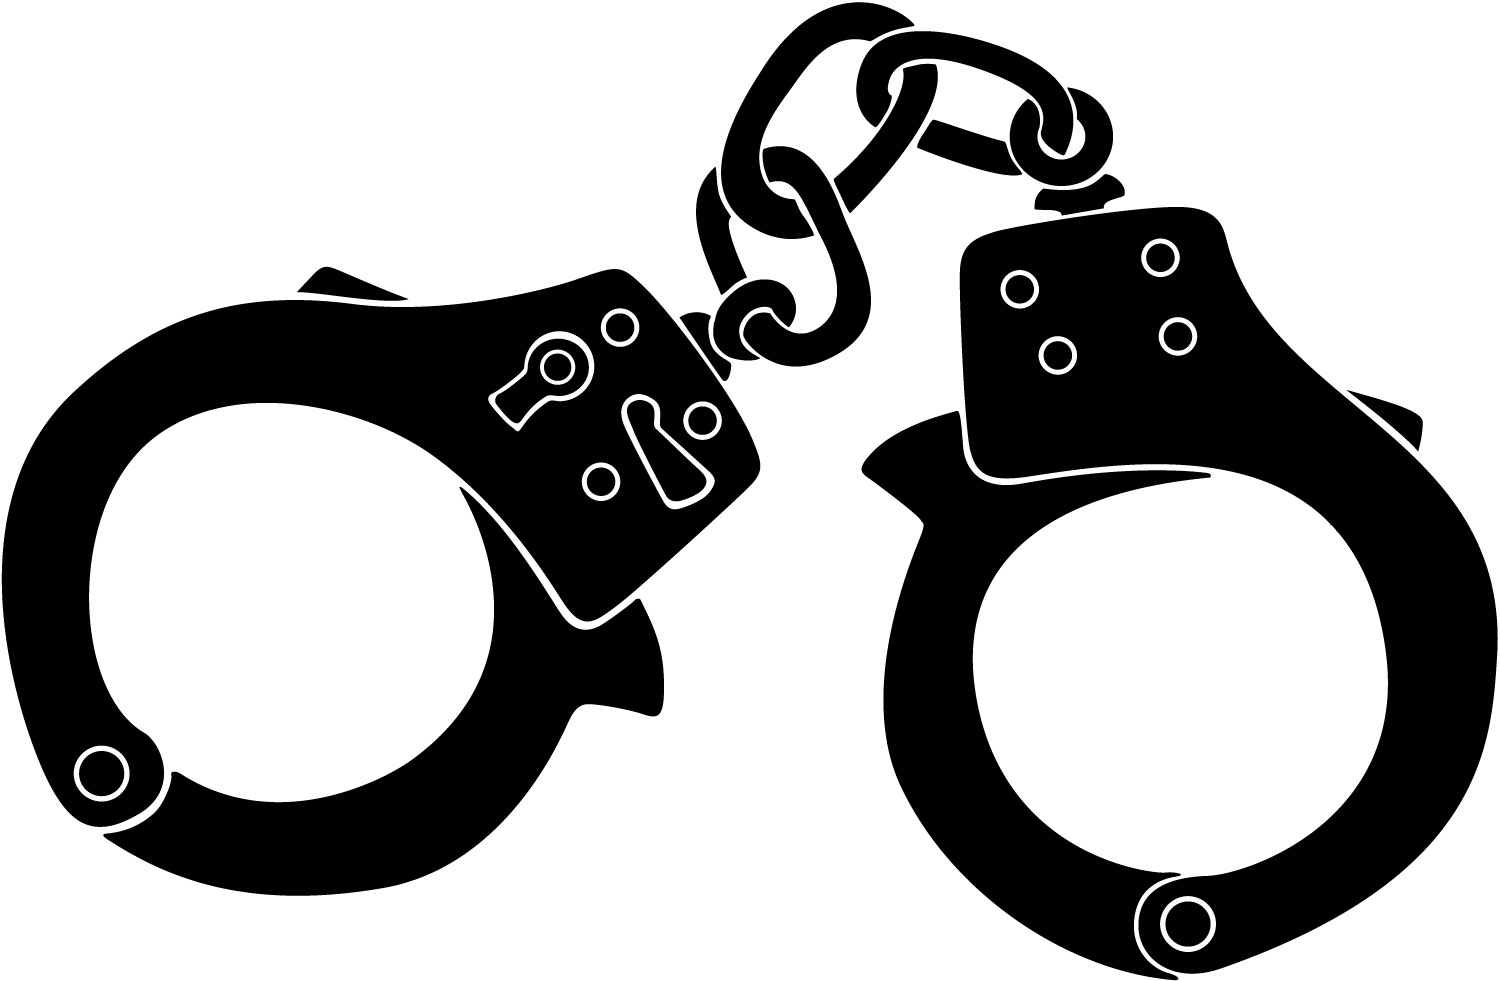 Handcuffs take action crimina